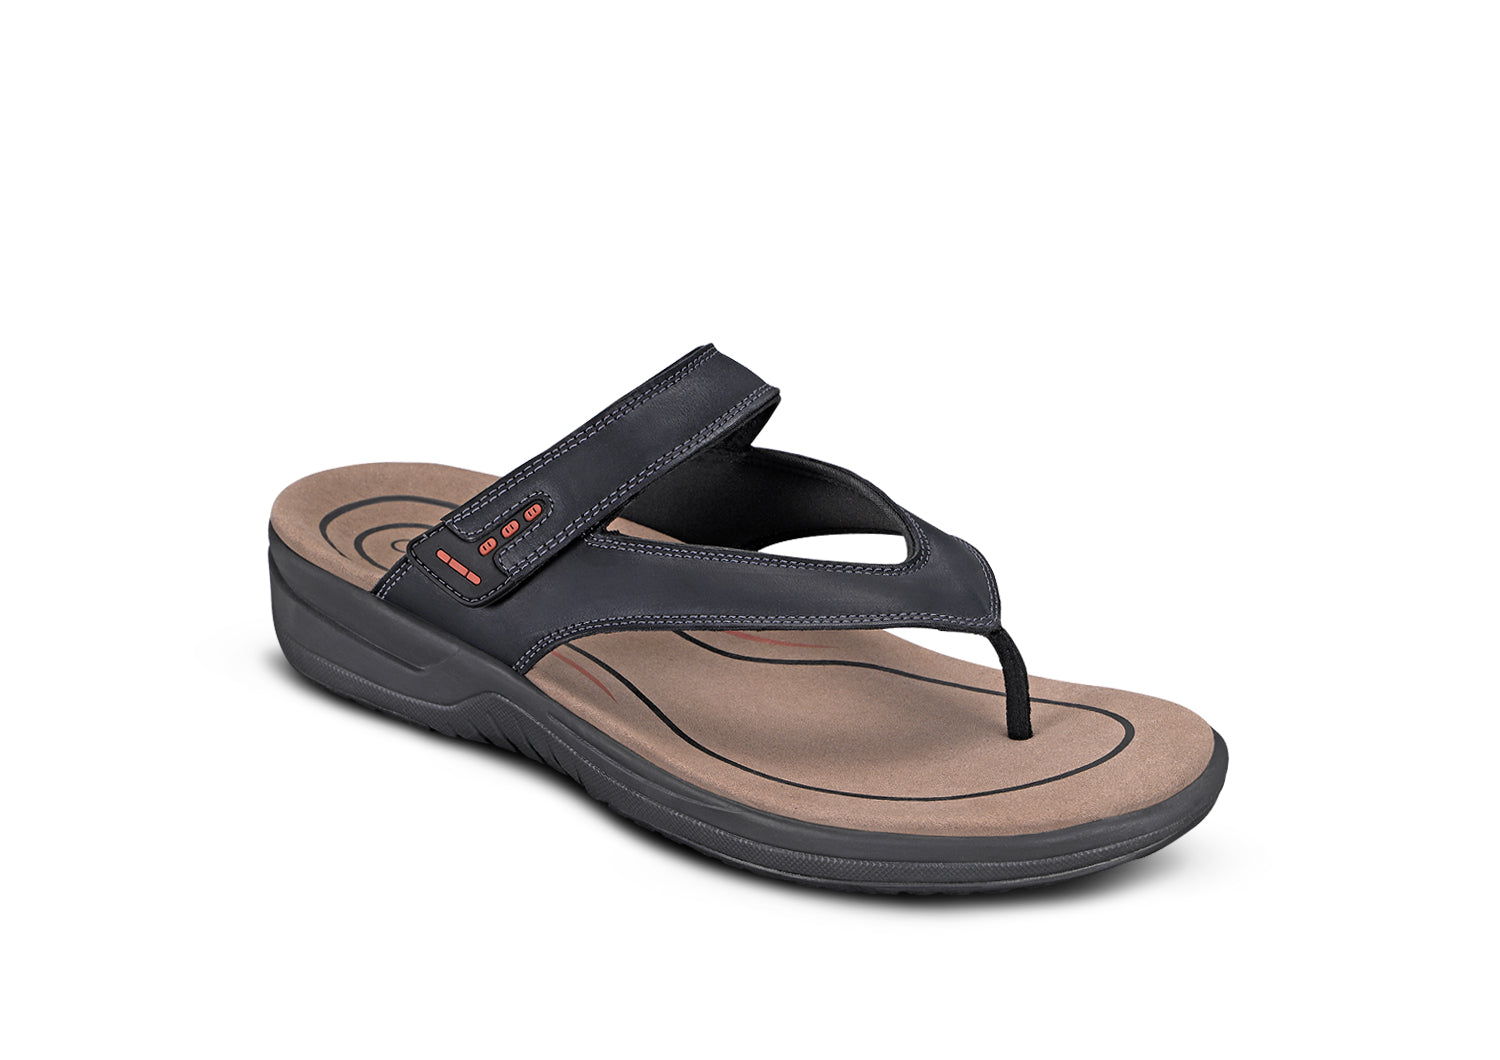 Men's Toe Post Sandals With Arch Support | OrthoFeet Eldorado Black